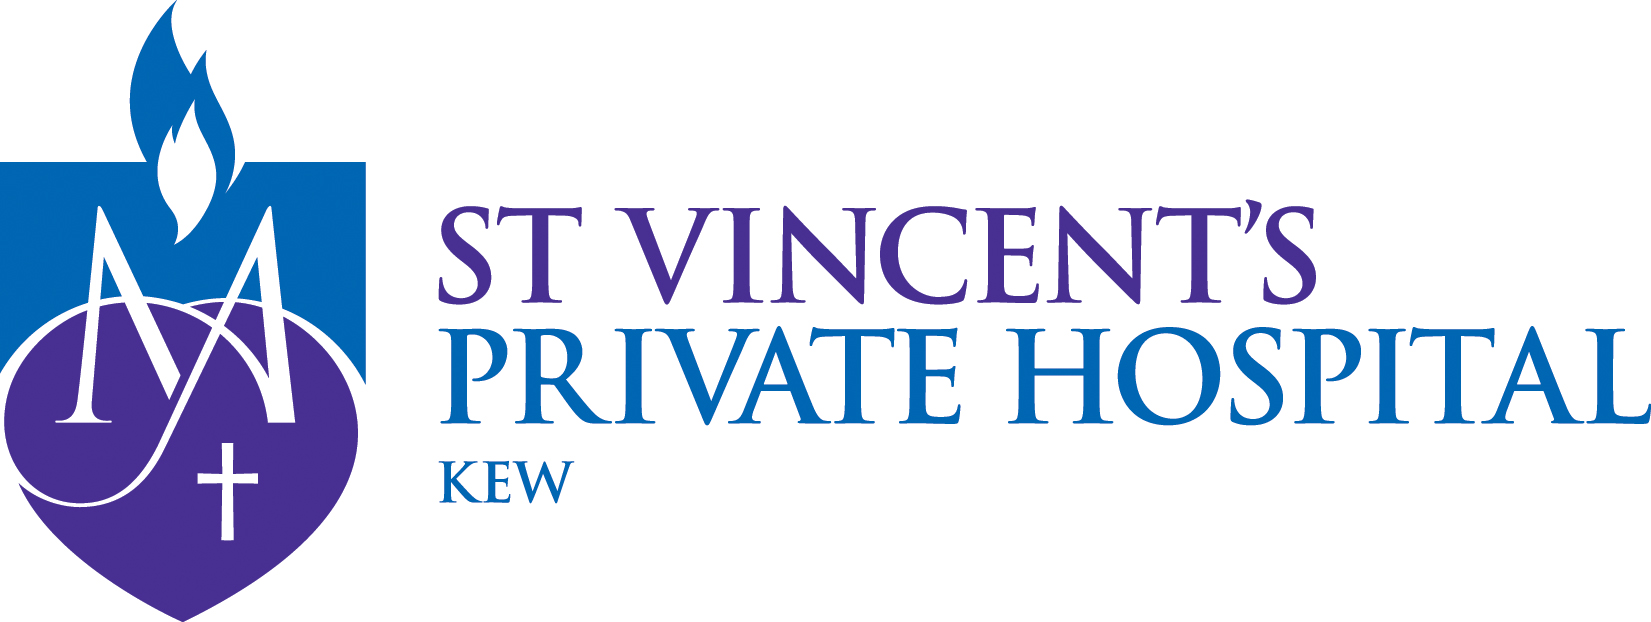 St Vincent’s Private Hospital, Kew